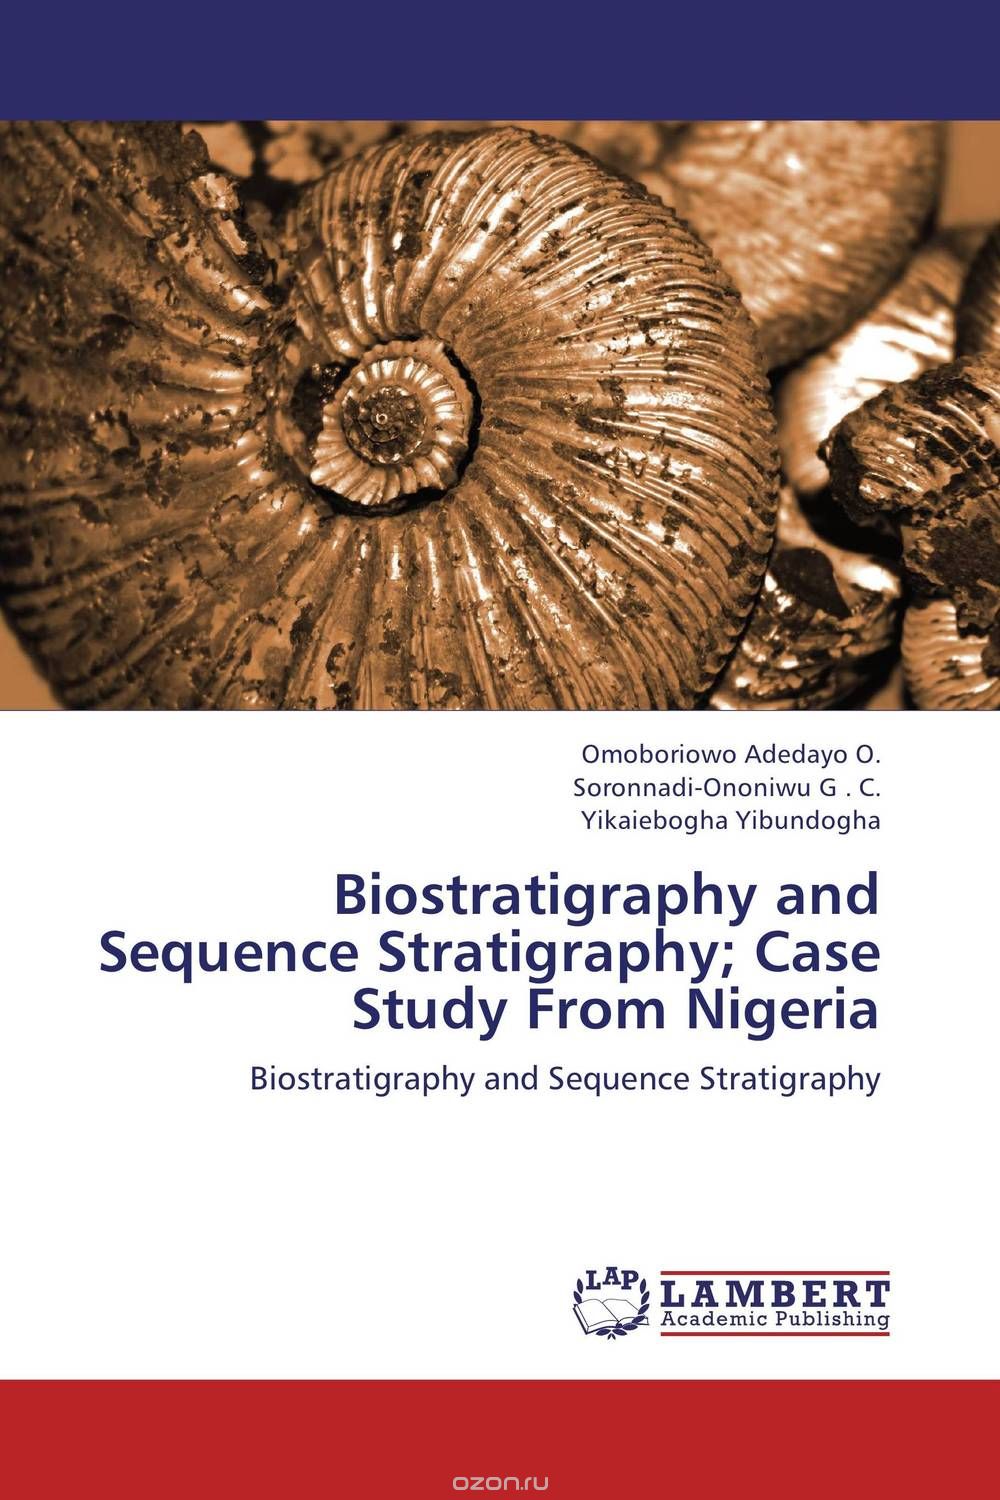 Скачать книгу "Biostratigraphy and Sequence Stratigraphy; Case Study From Nigeria"